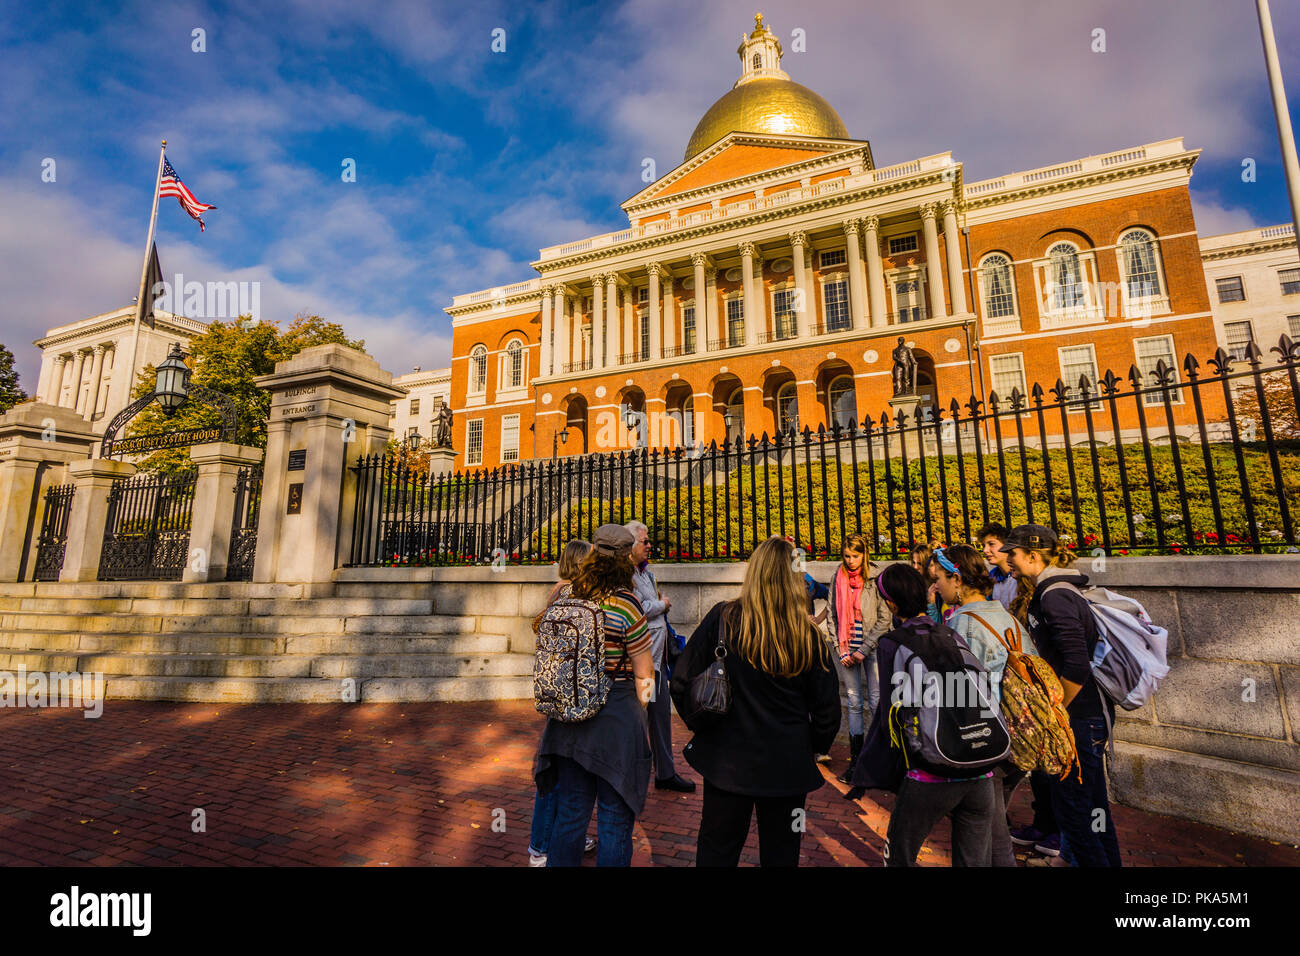 Massachusetts State House _ Boston, Massachusetts, USA Stock Photo